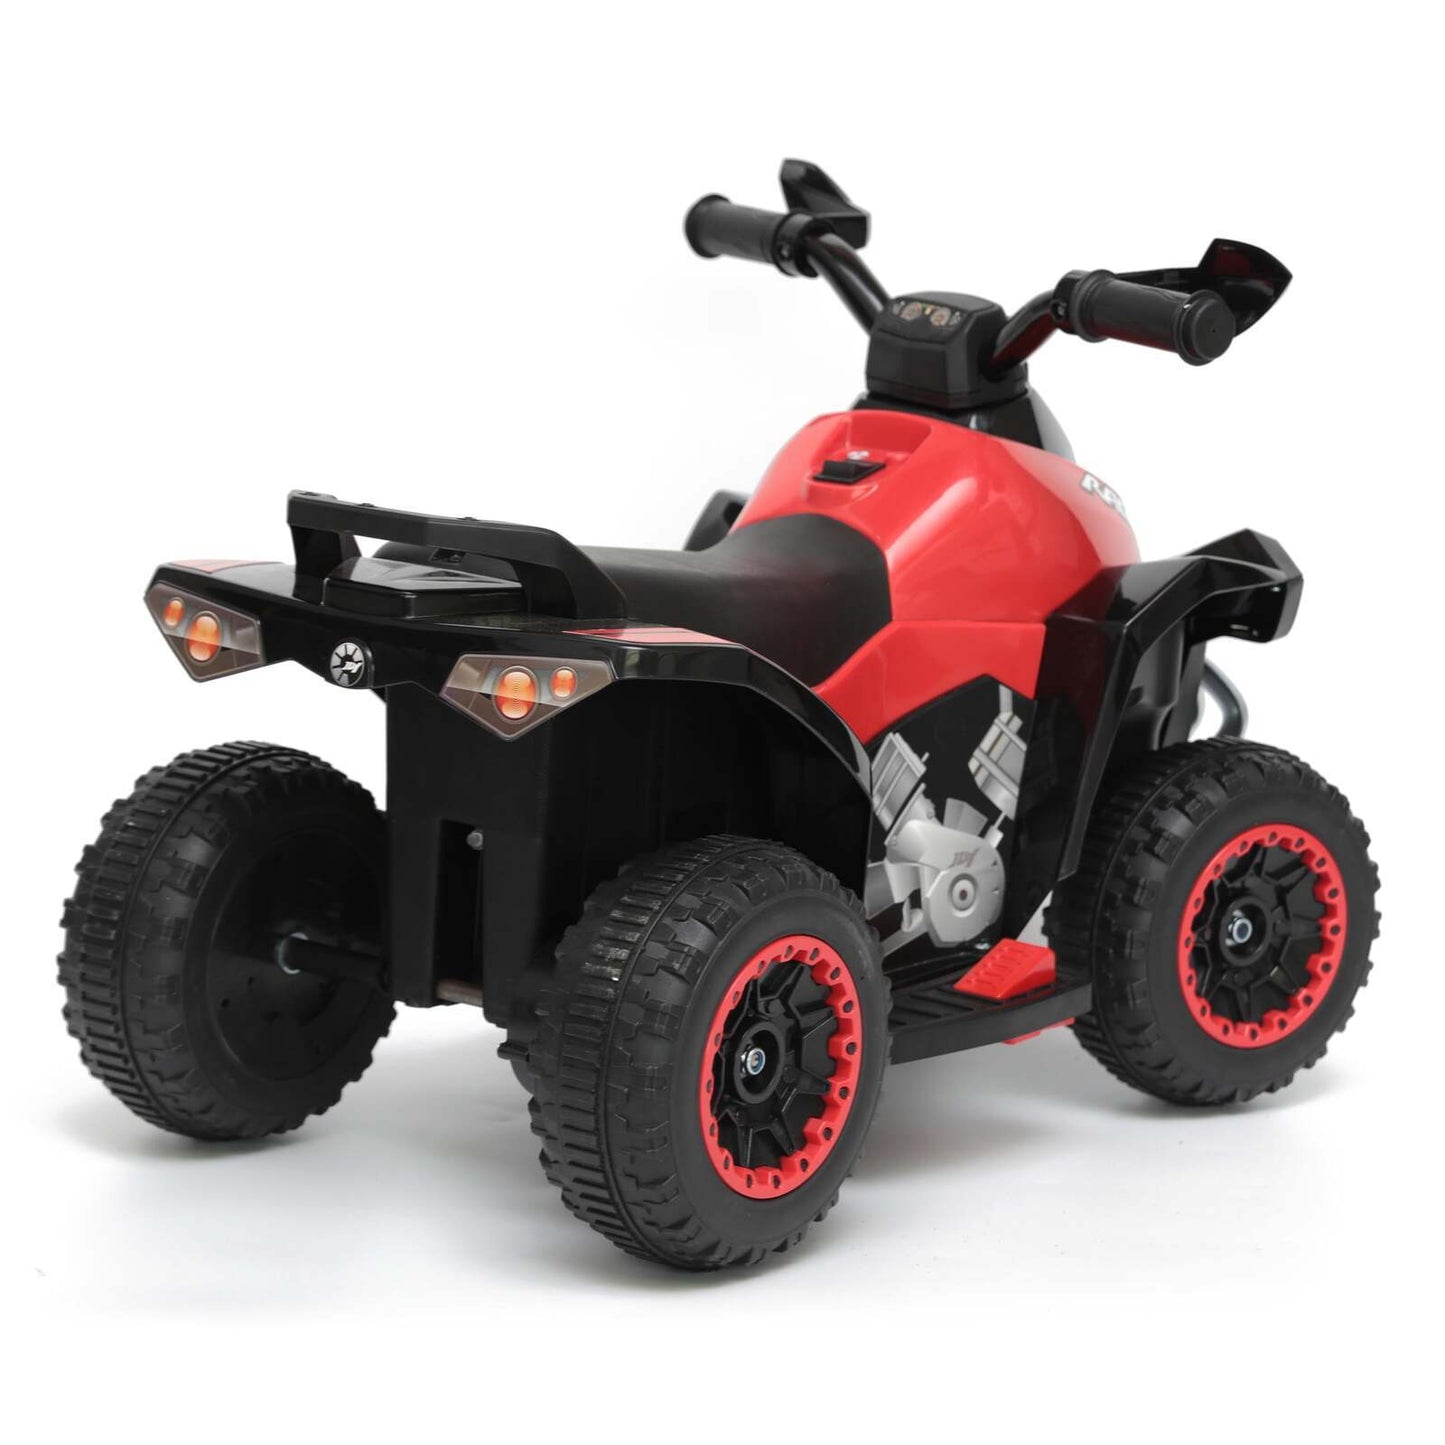 Quad Ride-on Electronic 4 Wheel ATV - Red